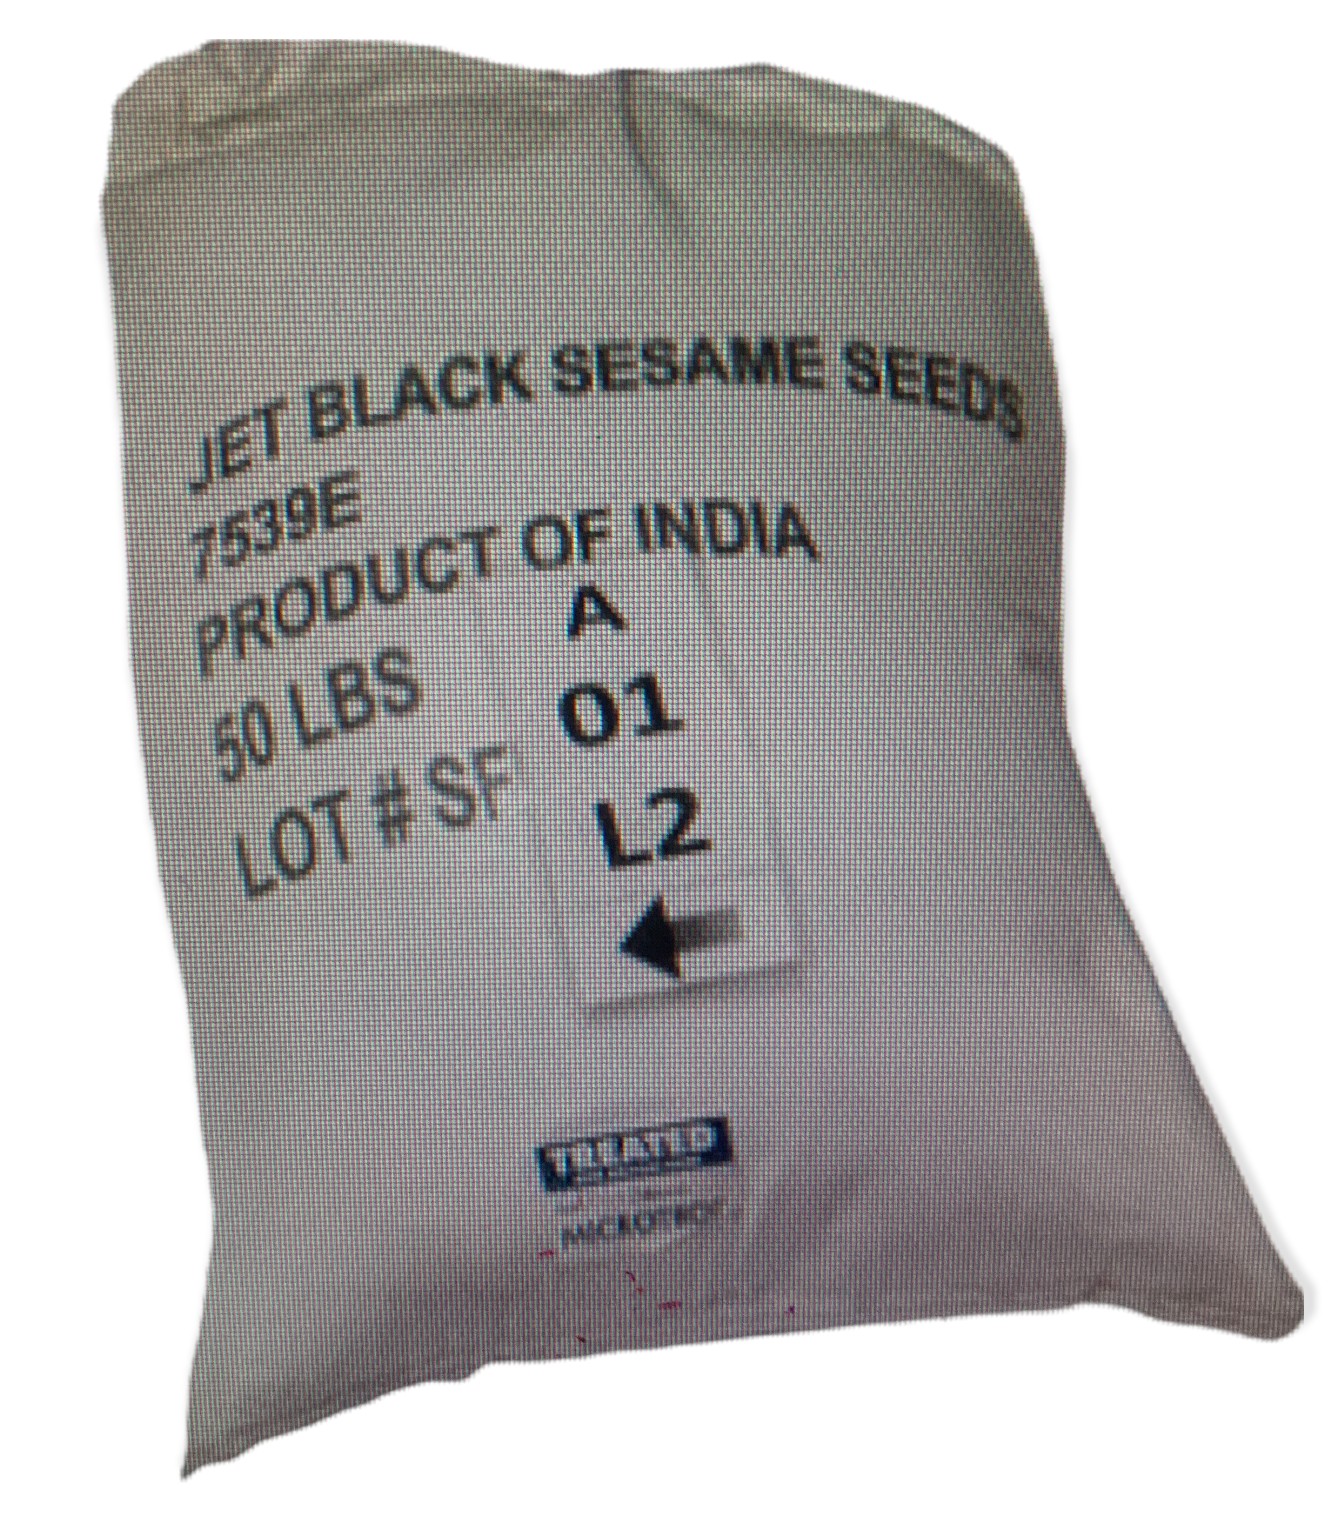 #0493-10ct Jet Black Sesame Seeds-India